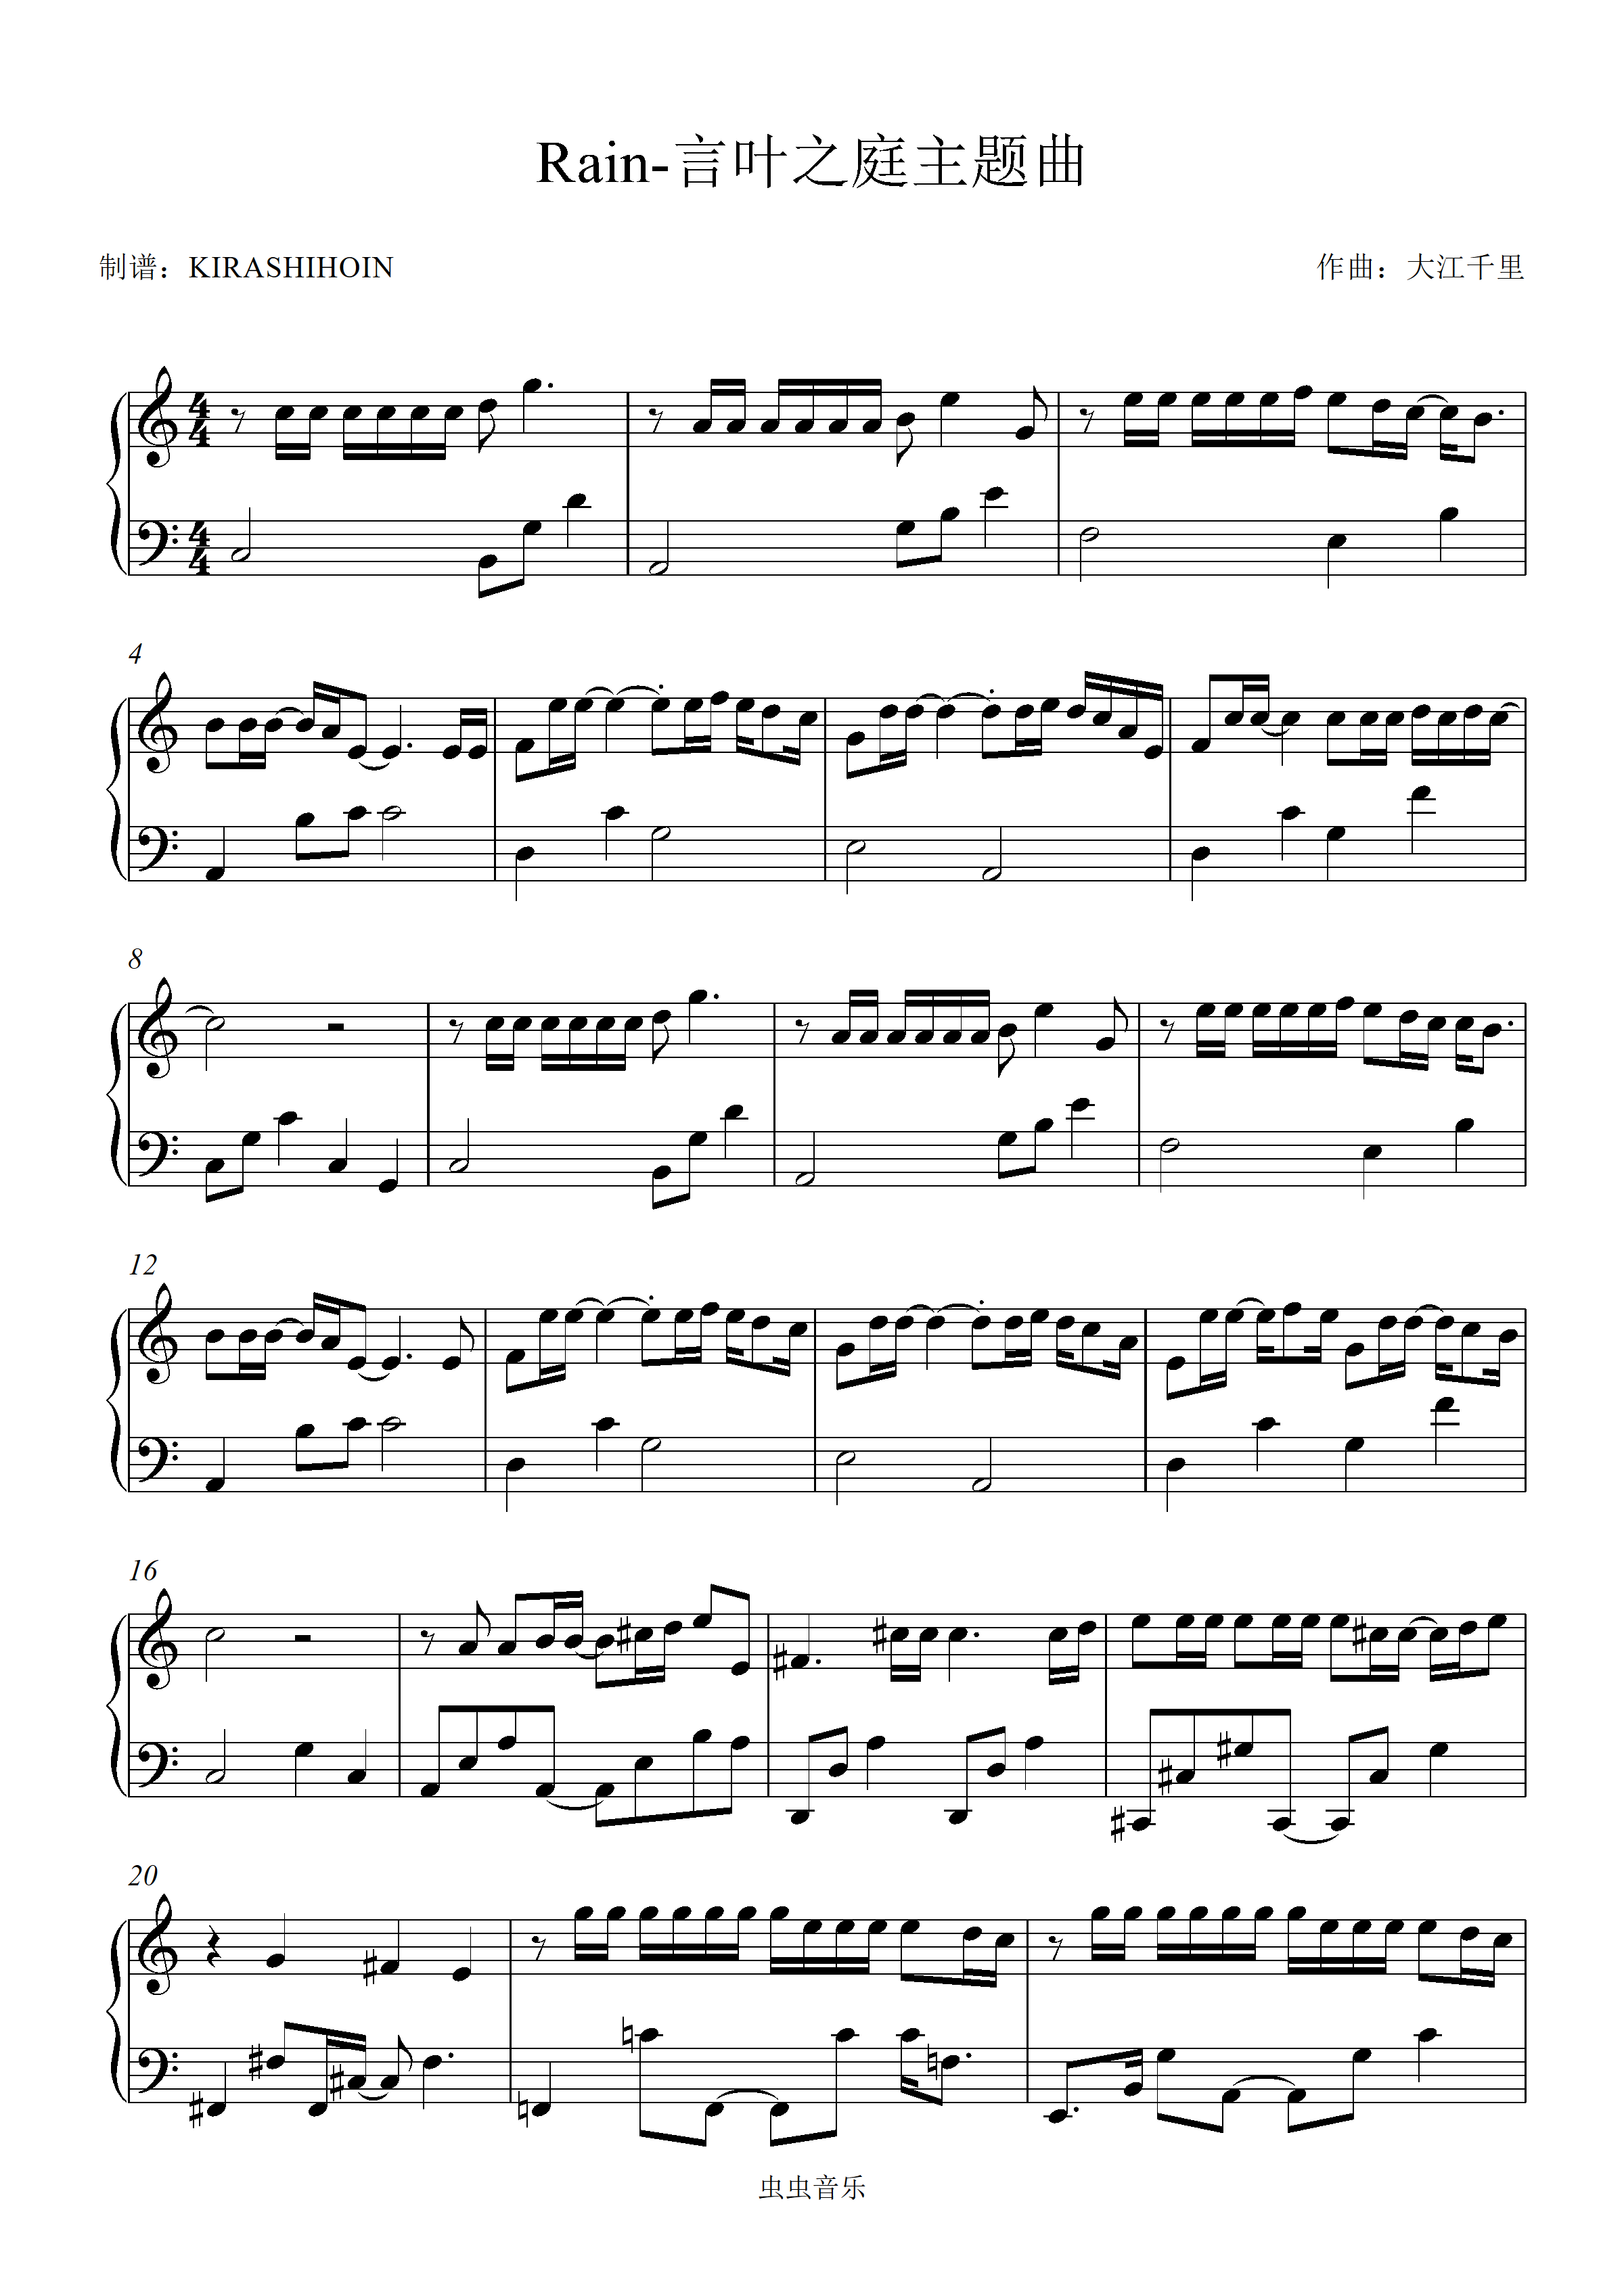 A Rainy Morning-《言叶之庭》OST-EOP教学曲双手简谱预览1-钢琴谱文件（五线谱、双手简谱、数字谱、Midi、PDF）免费下载